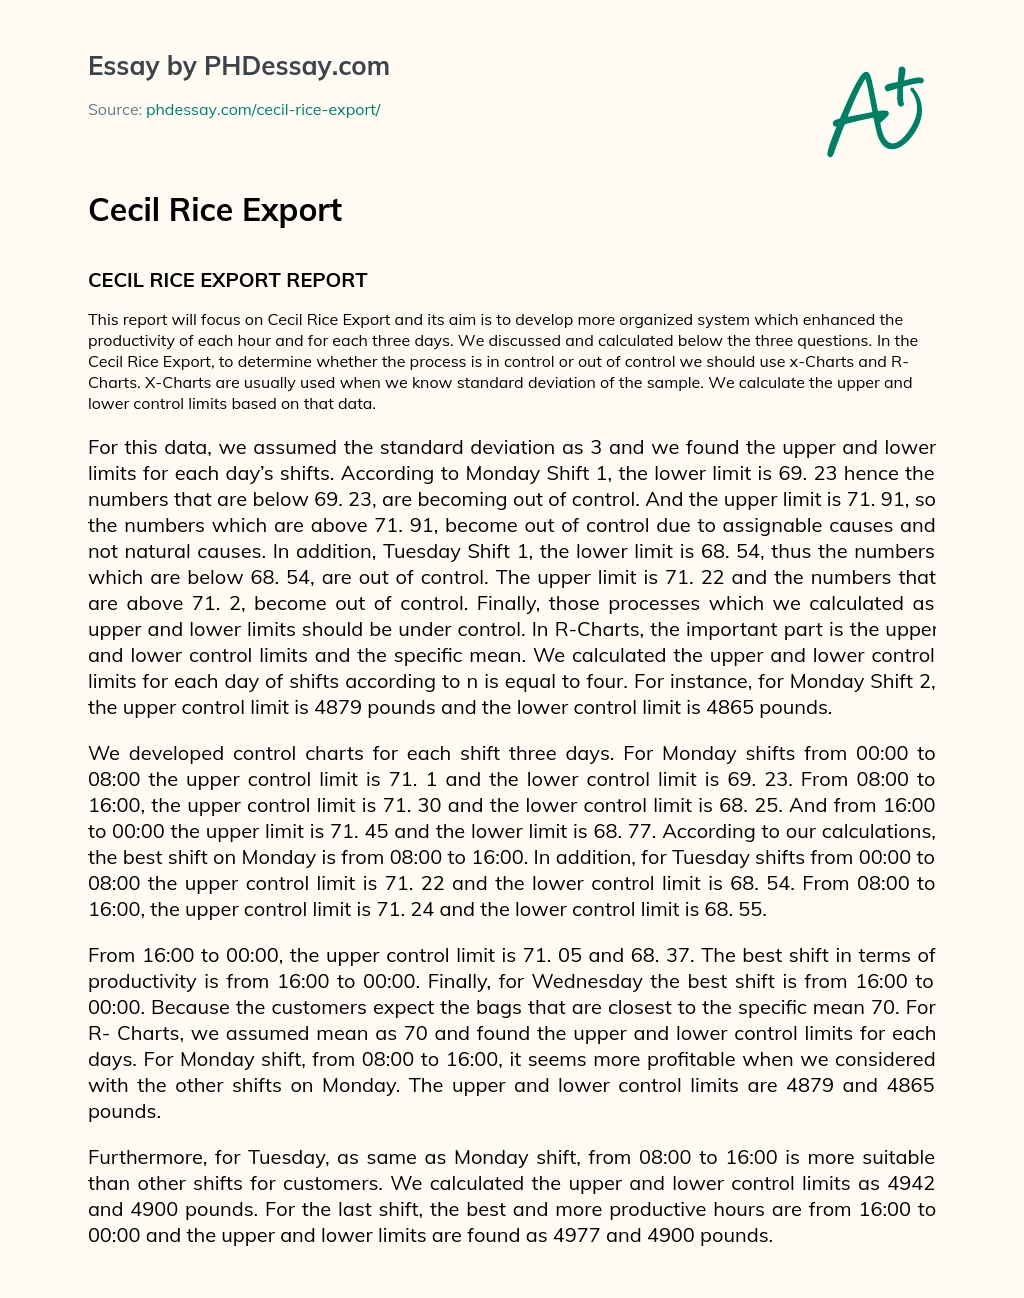 Cecil Rice Export essay